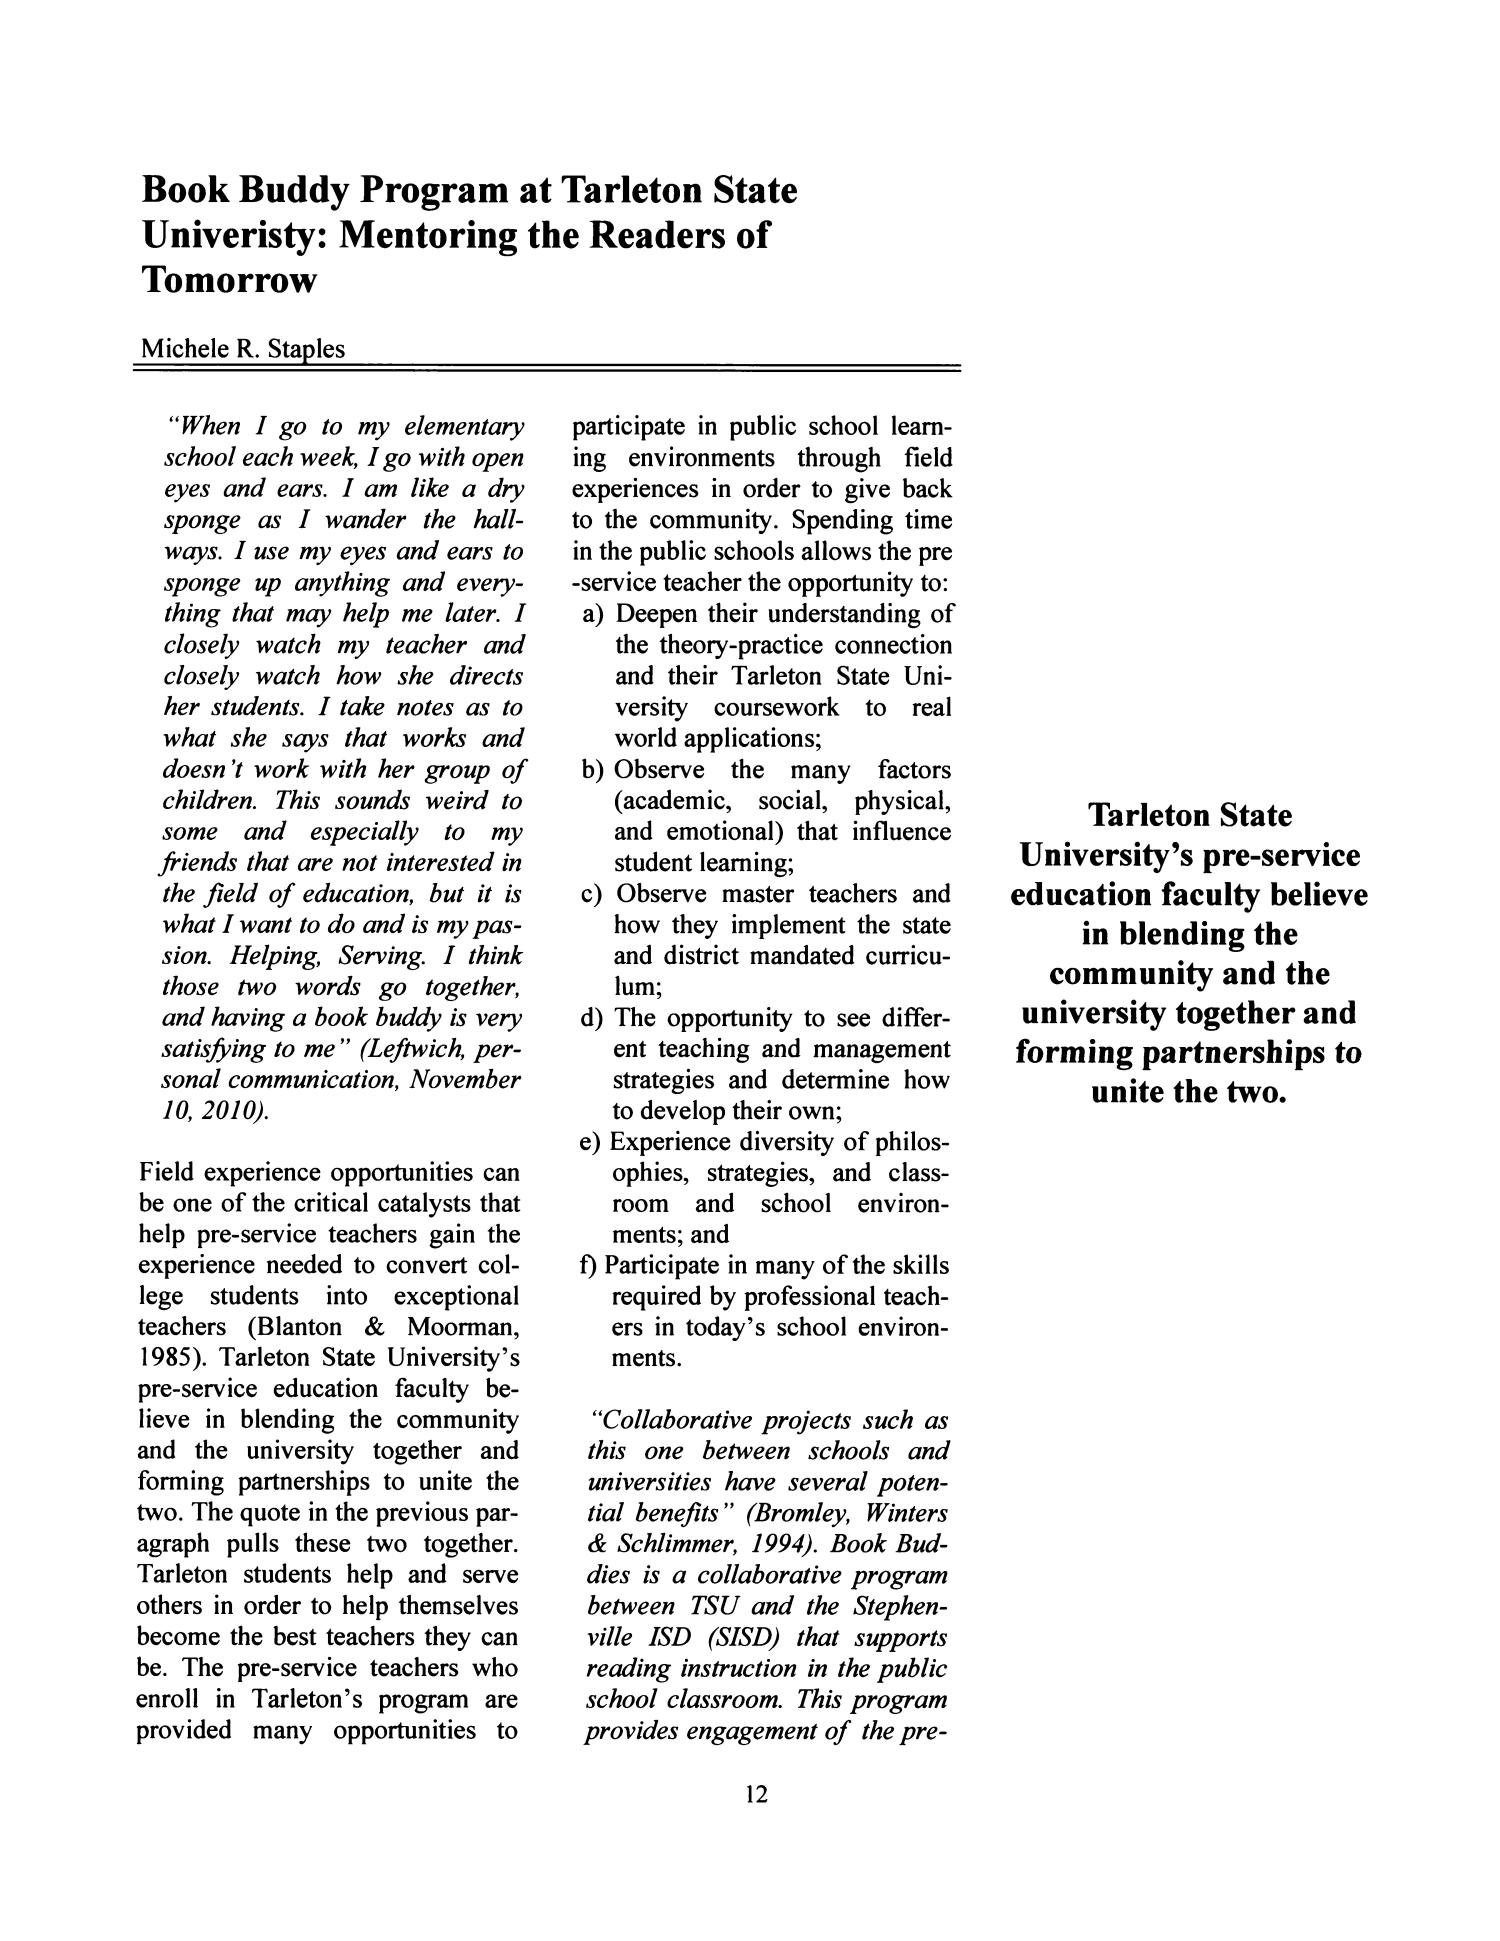 Journal of the Effective Schools Project, Volume 18, 2011
                                                
                                                    12
                                                